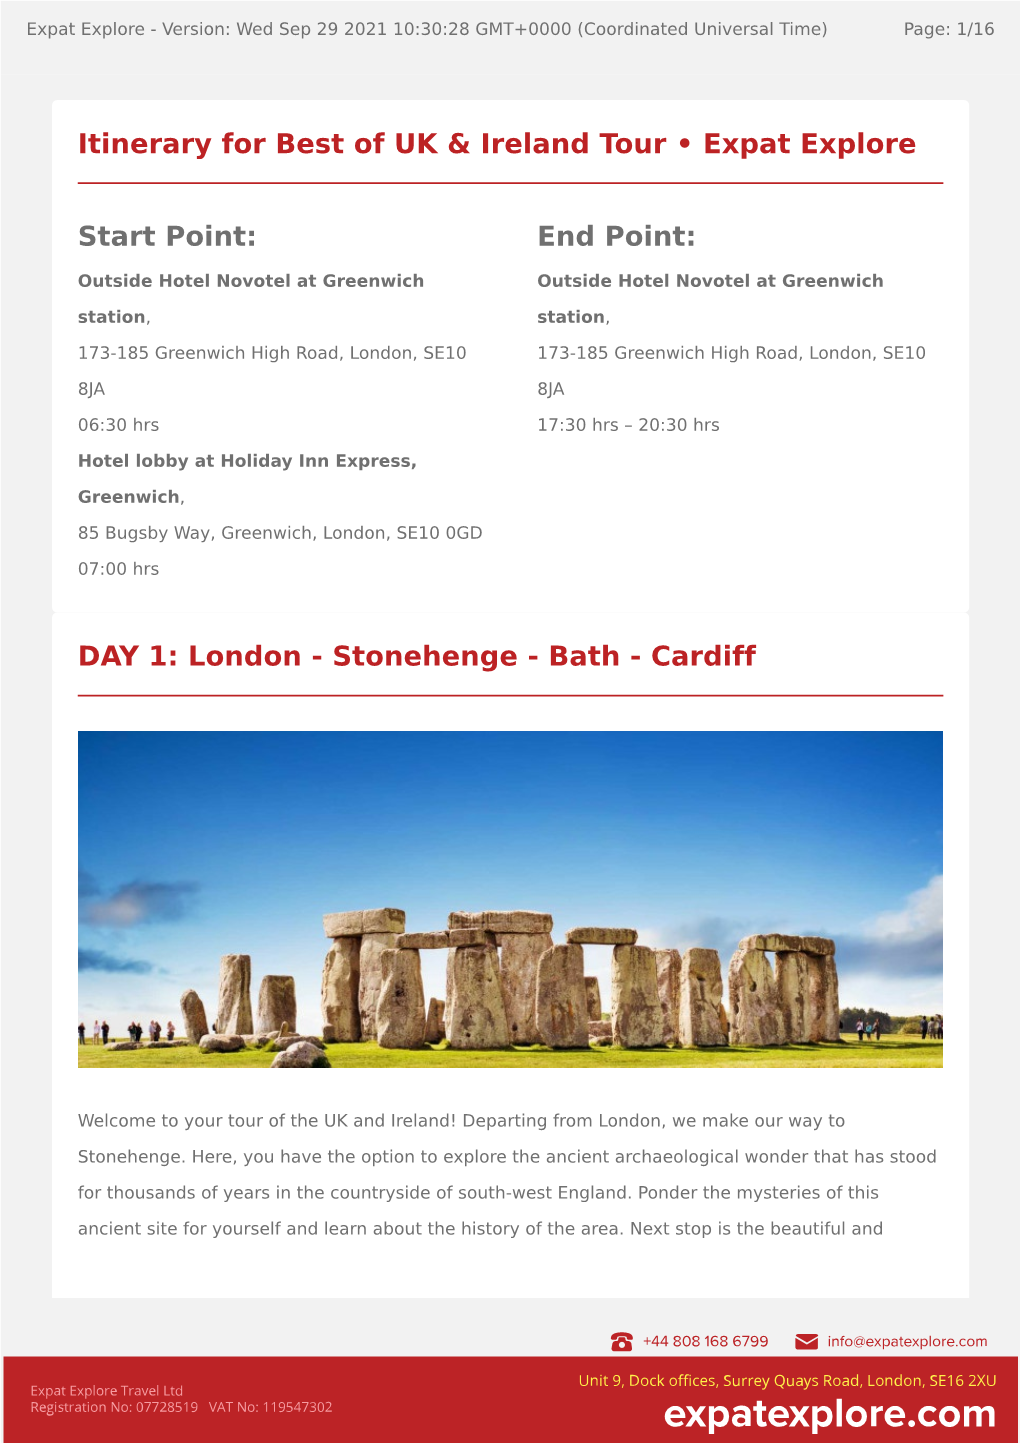 DAY 1: London - Stonehenge - Bath - Cardiff